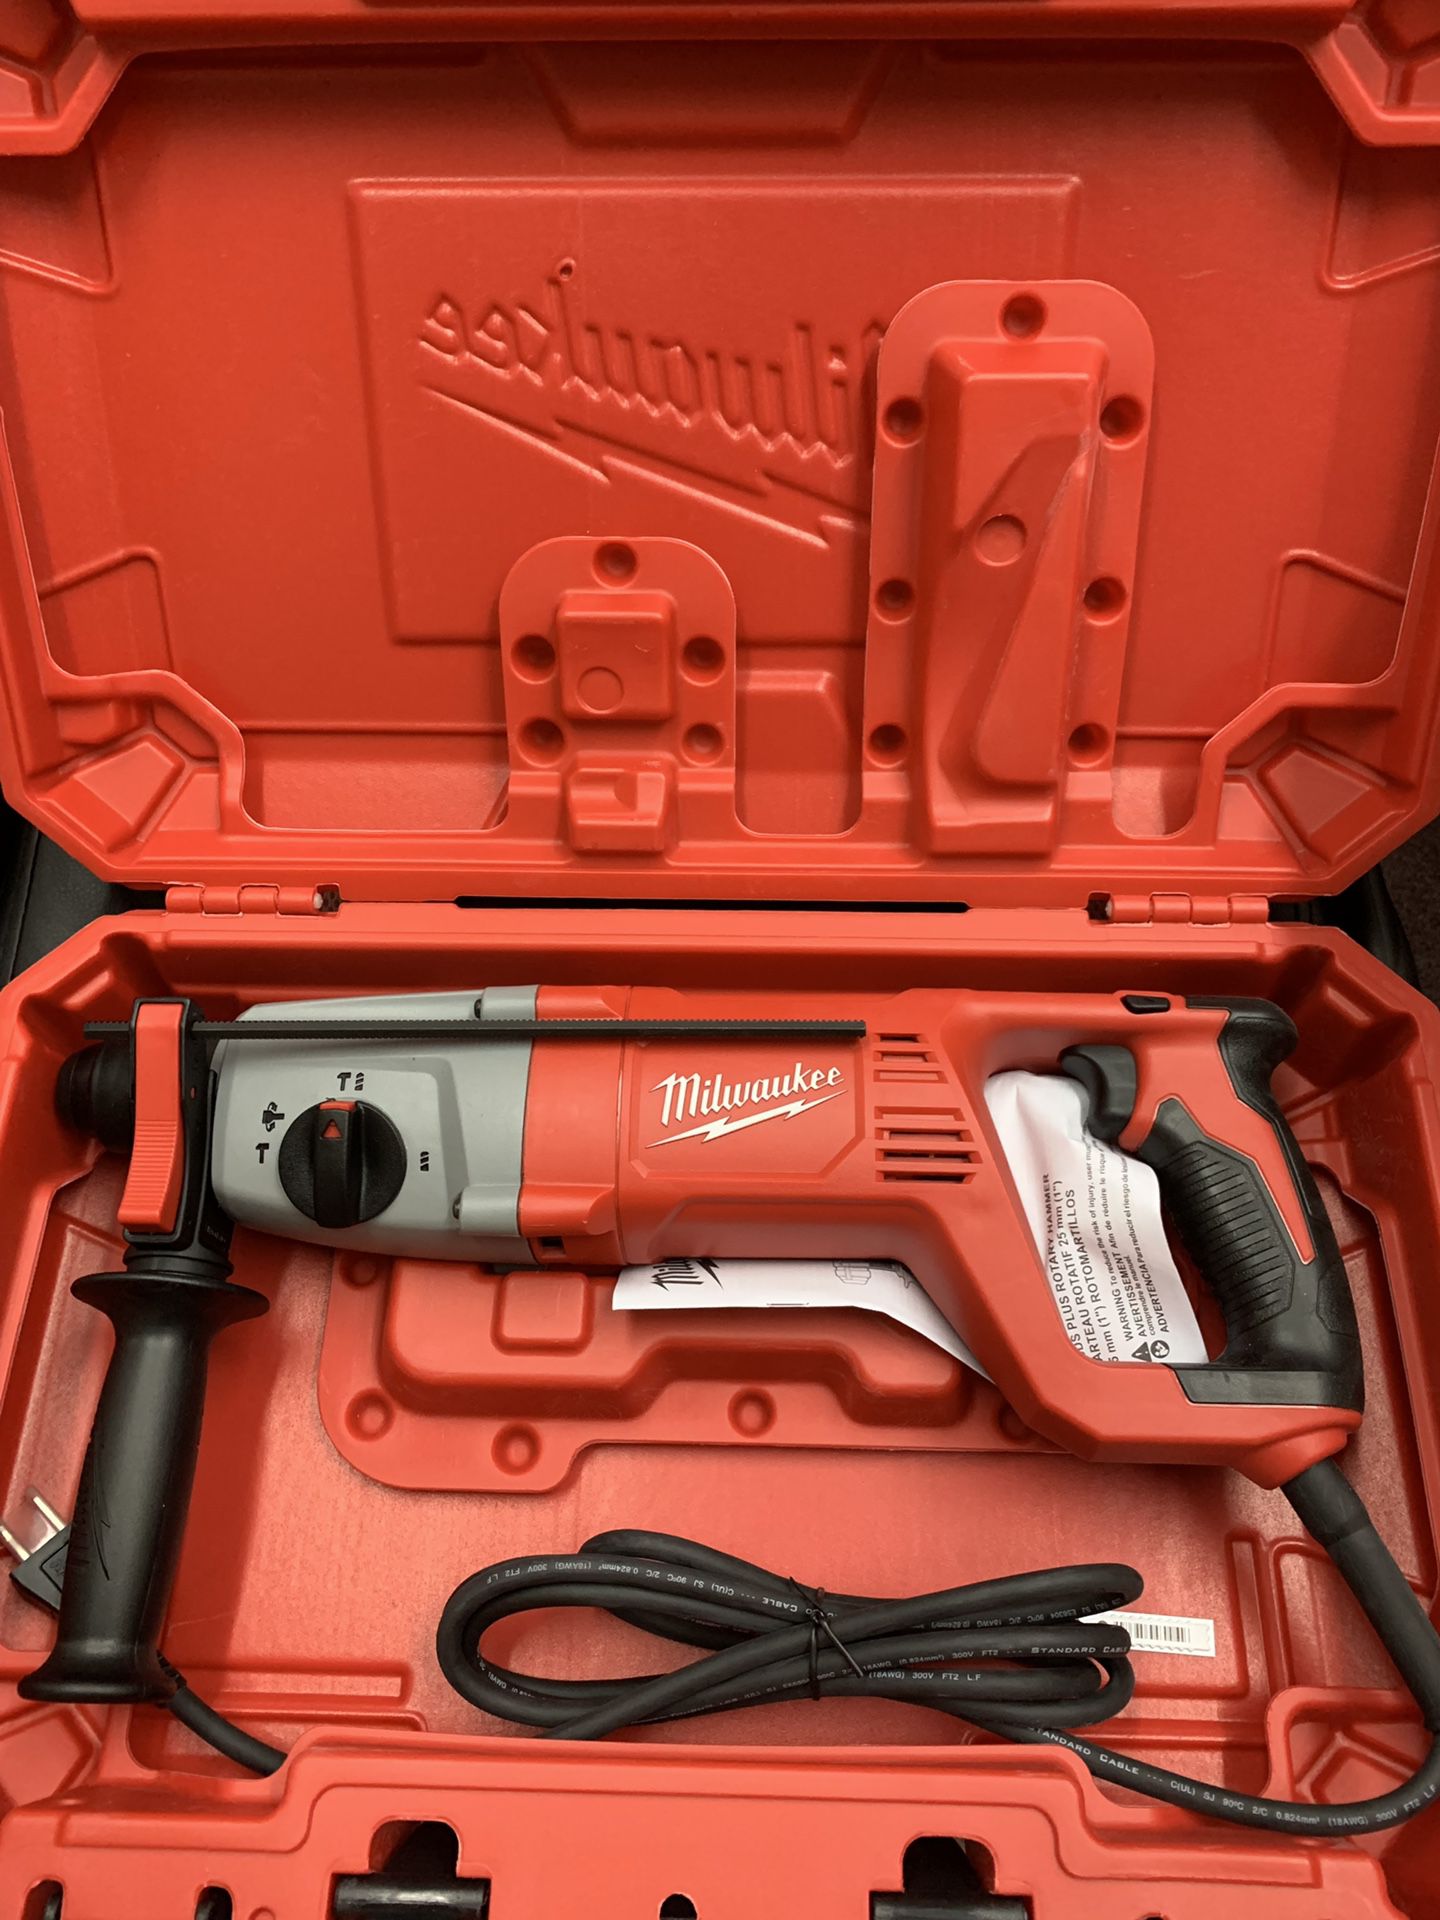 New Milwaukee 1” SDS Plus Rotary Hammer Kit. 5262-21